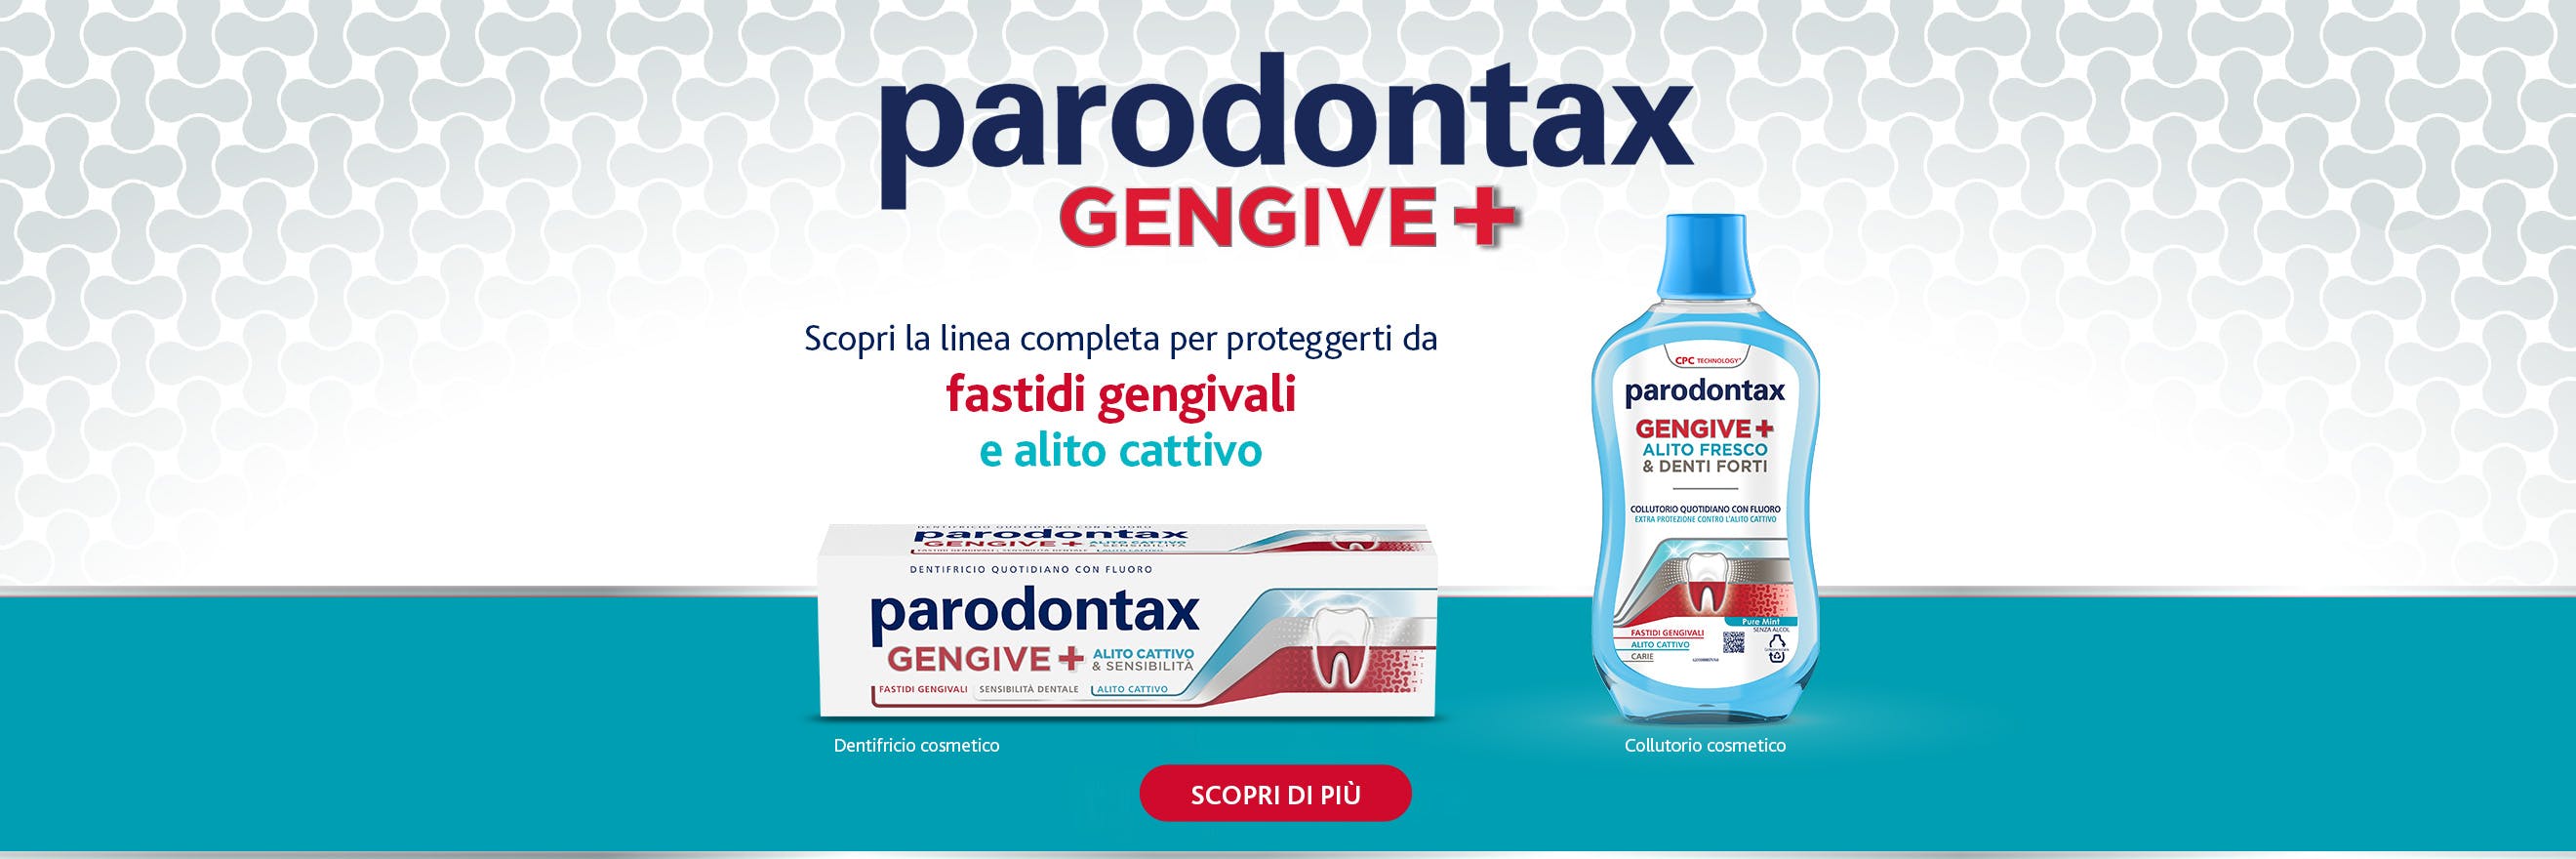 paradontax_gengive+